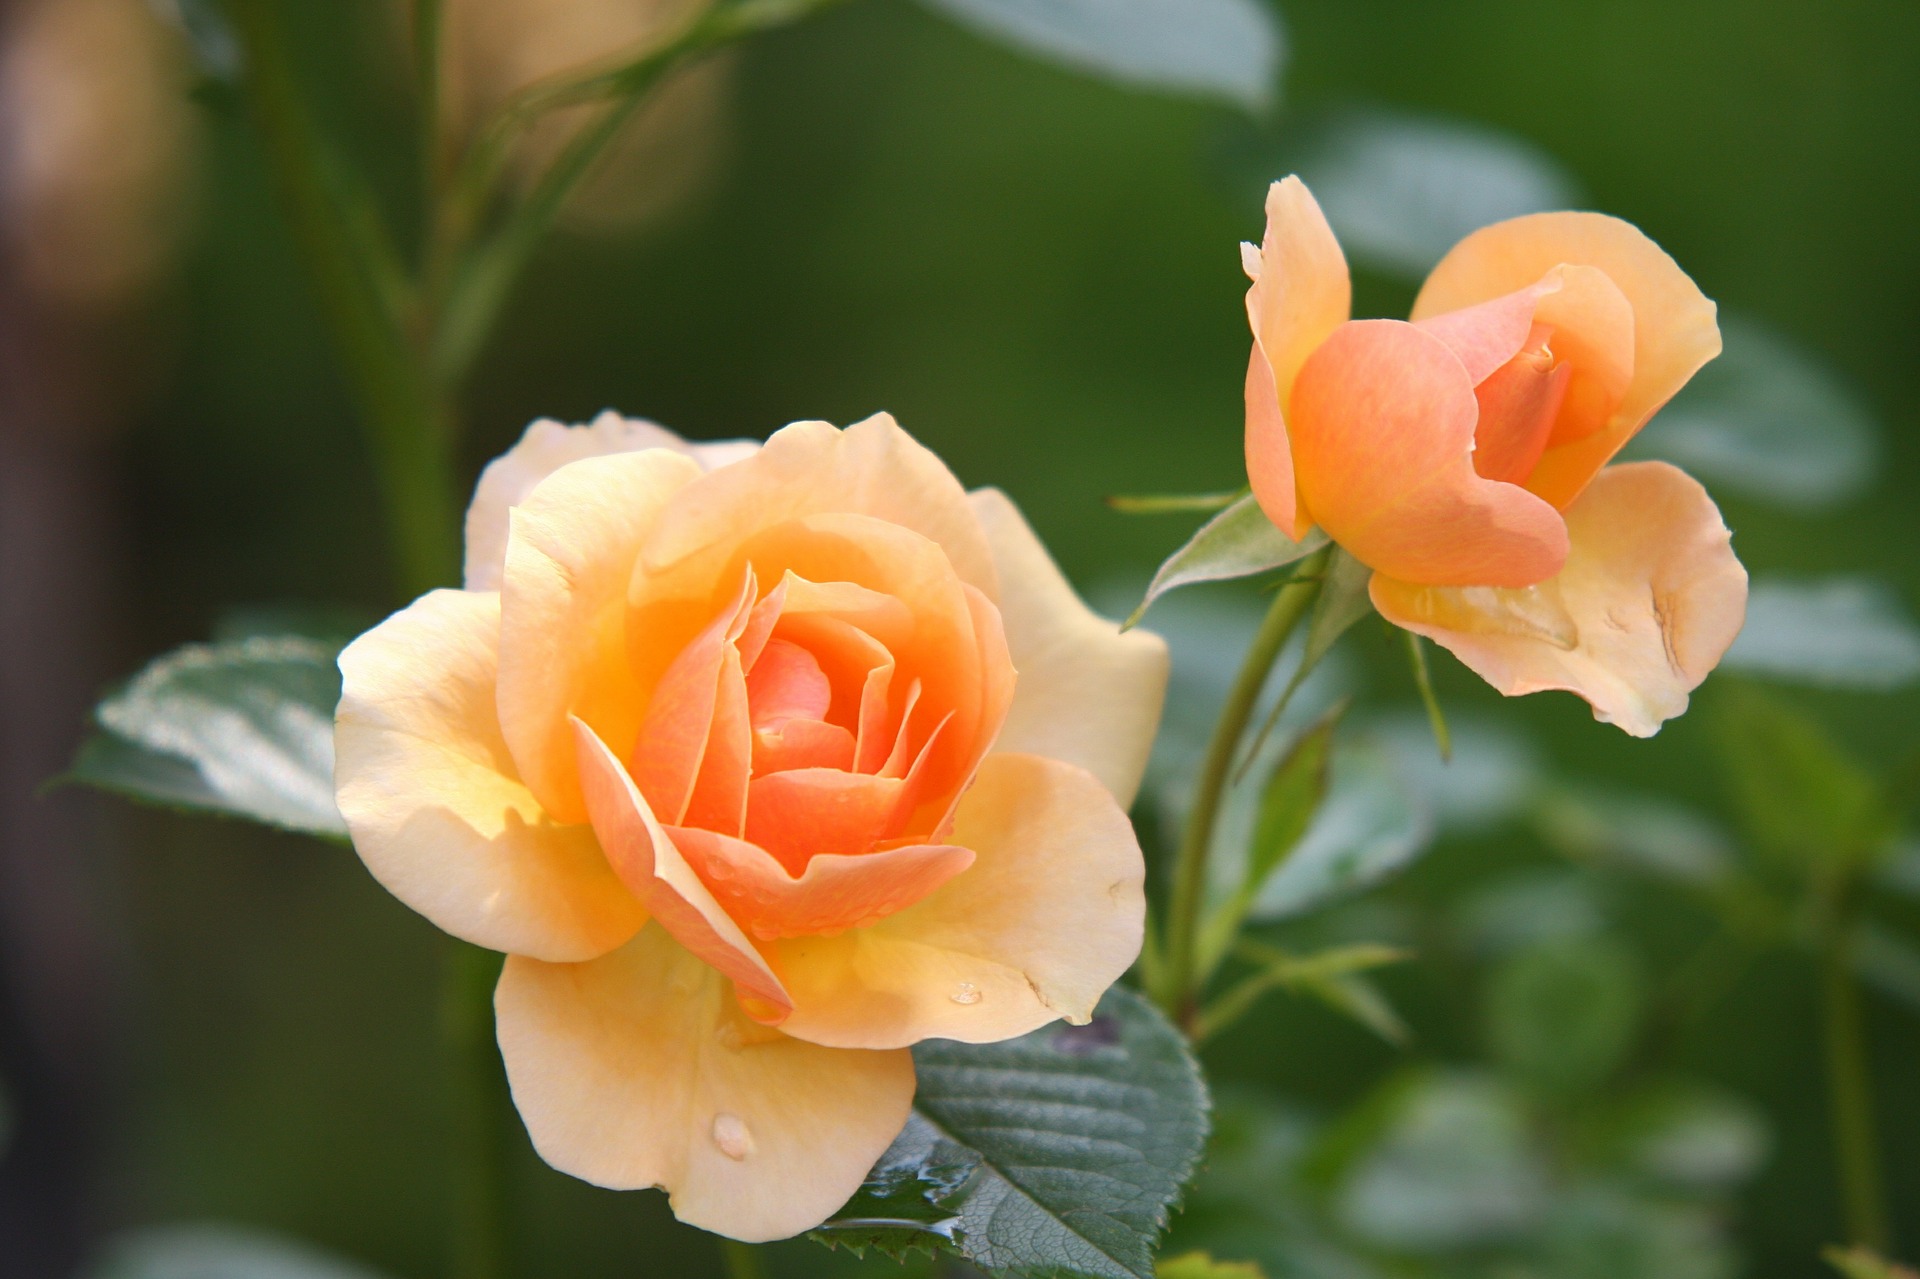 roses 616013 1920